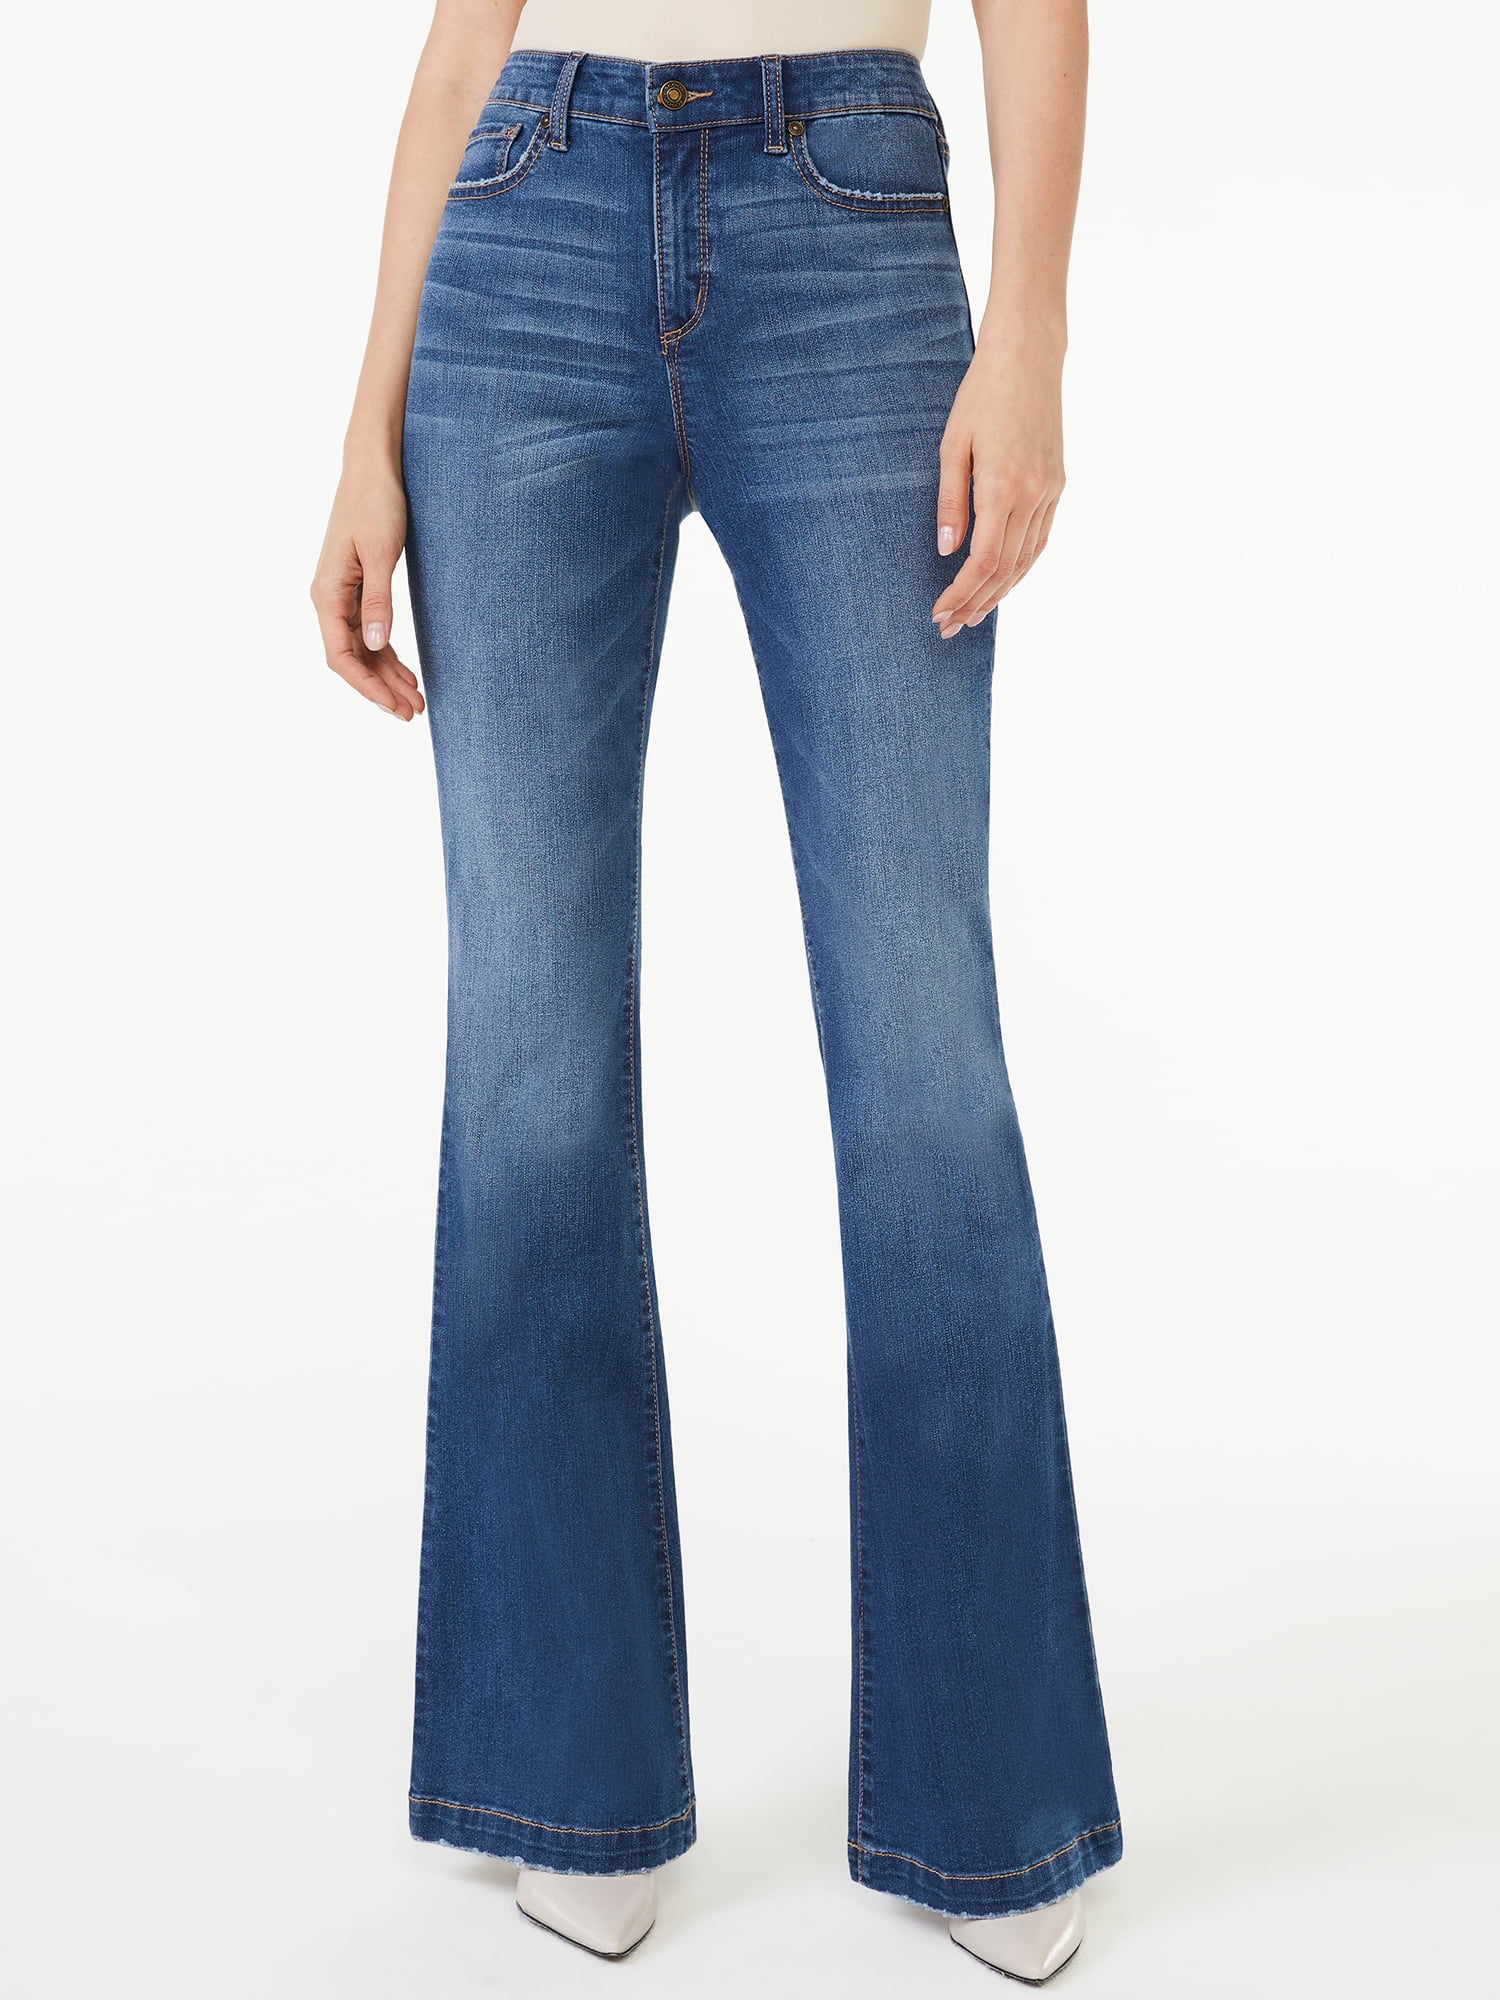 Scoop Women's High-Rise Flare Jeans - Walmart.com